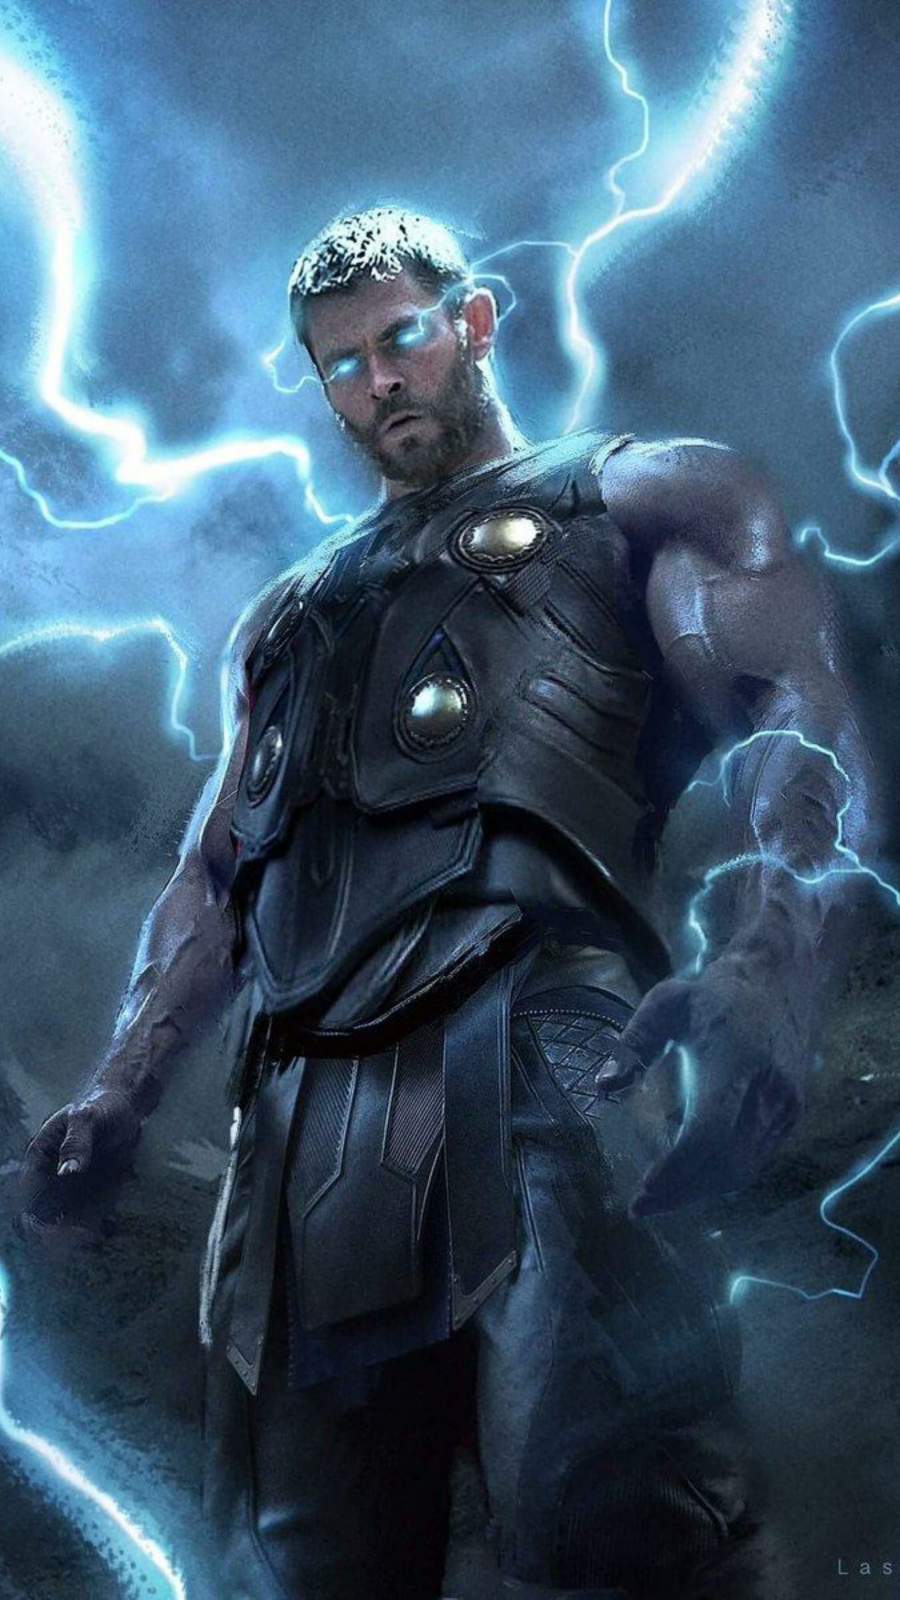 Thor God Of Thunder Wallpapers